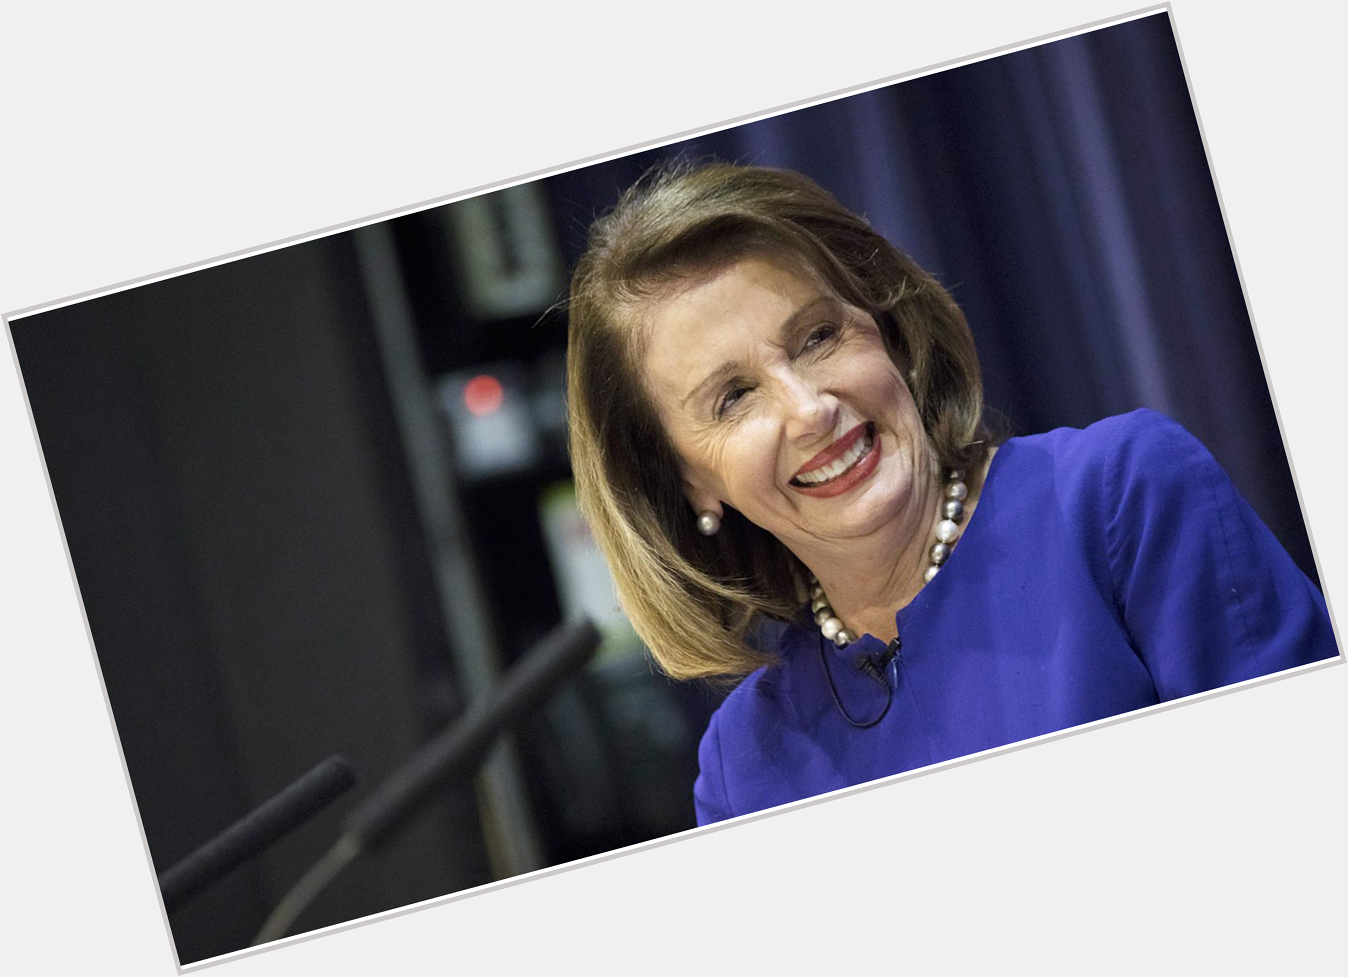 Happy Birthday to Nancy Pelosi, Speaker of the U.S. House of Representatives!  